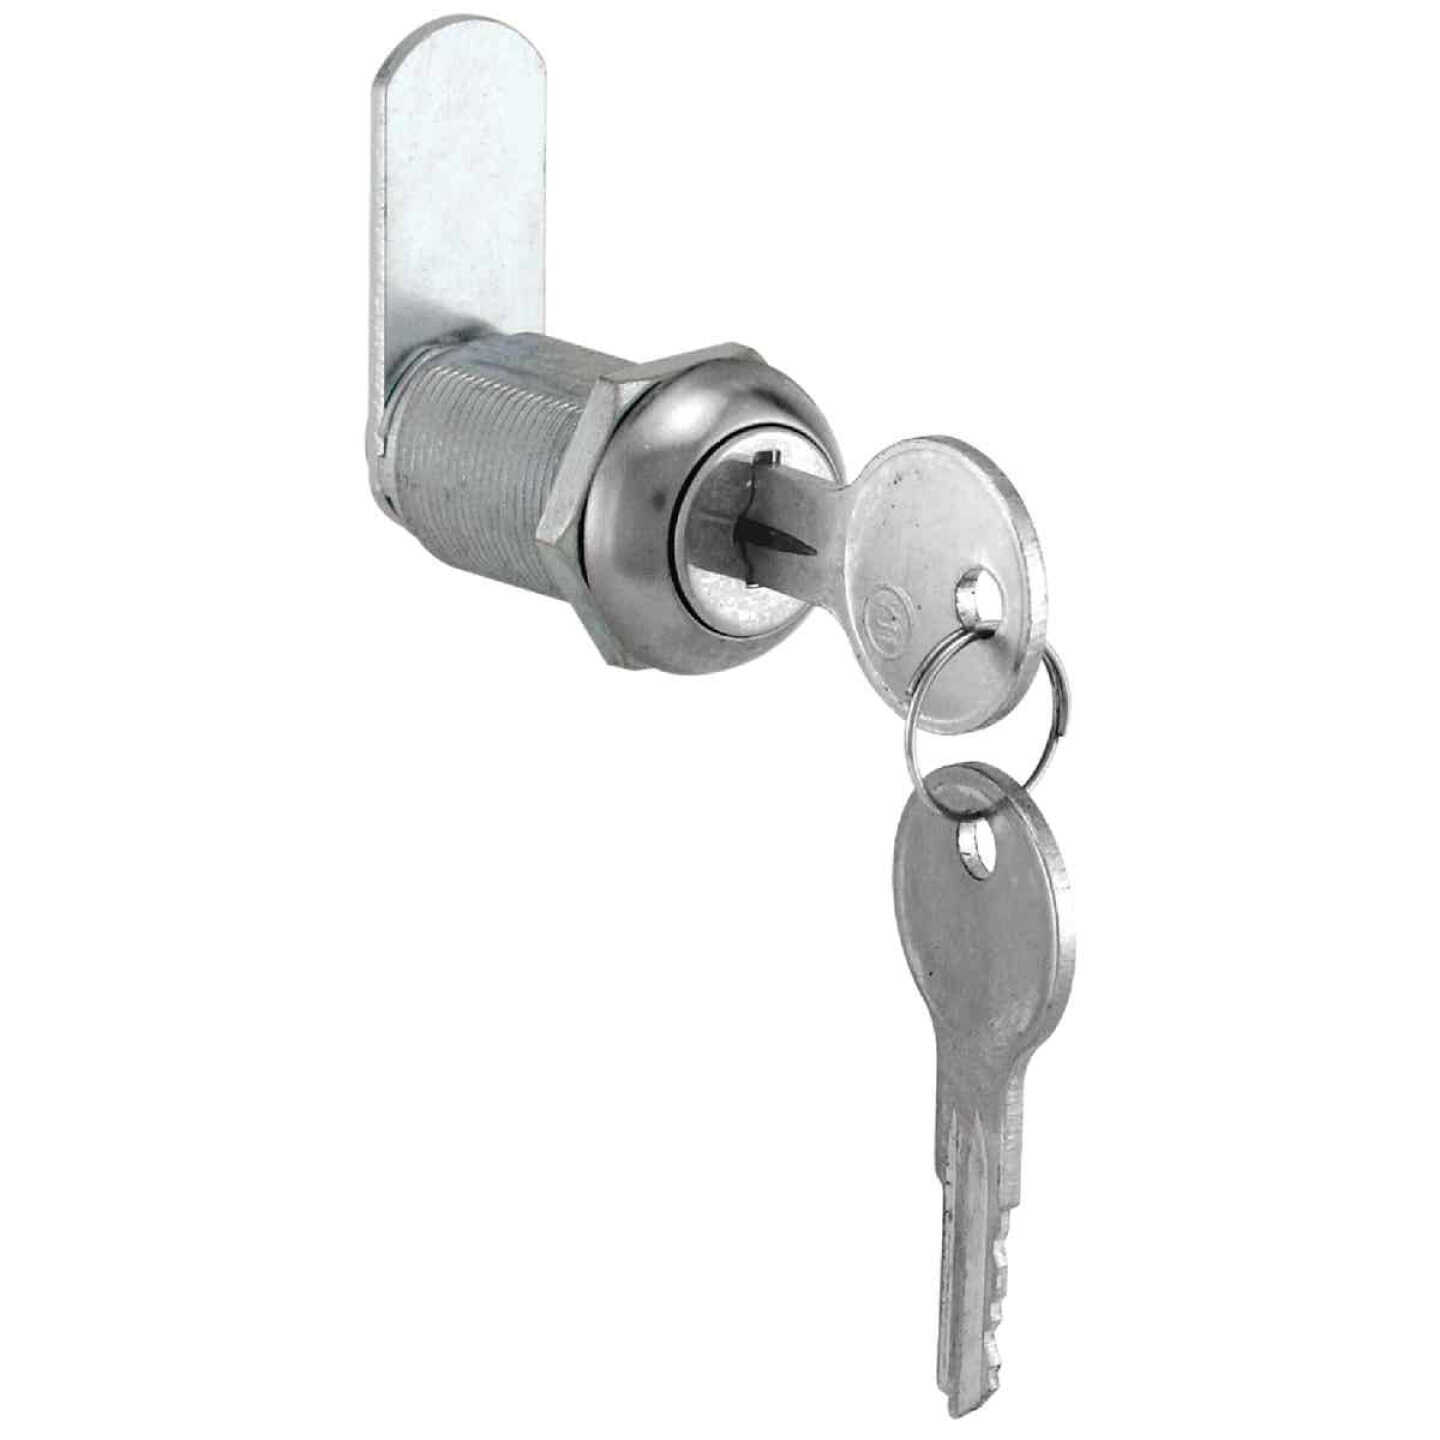 Defender Security 3/4 Steel Drawer & Cabinet Lock - Keyed